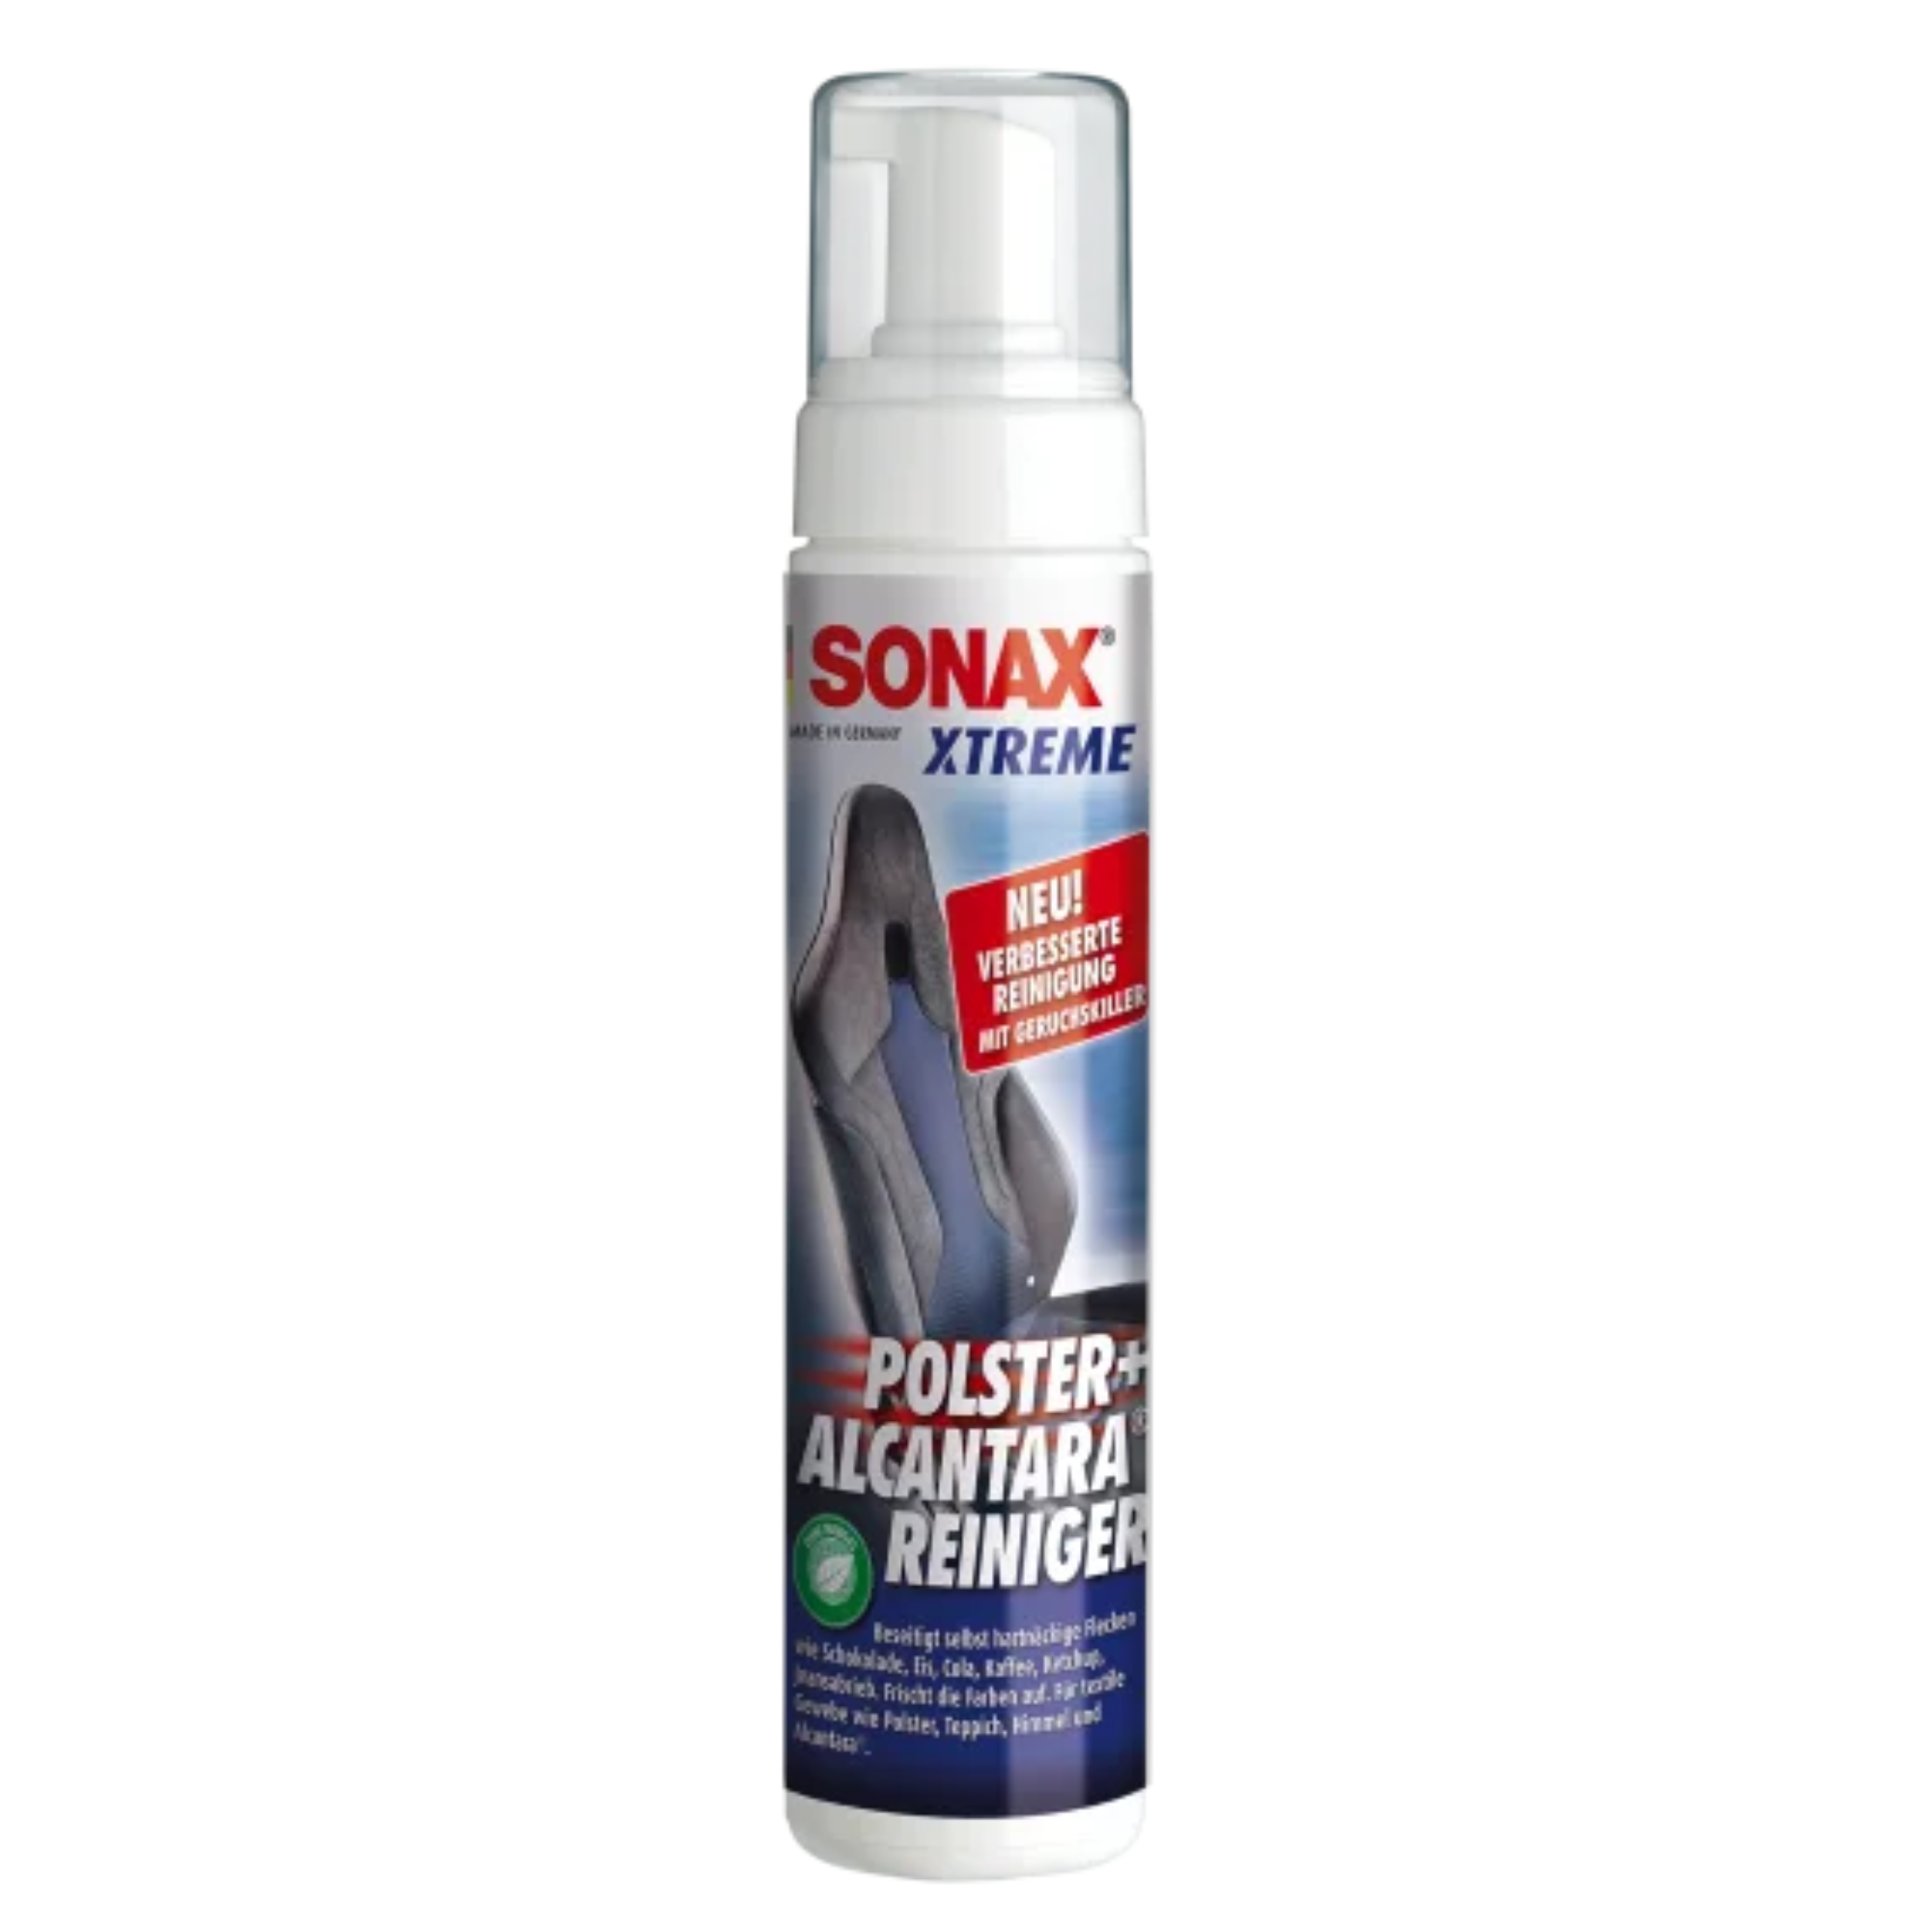 SONAX XTREME upholstery + Alcantara® cleaner propellant-free, 250ml